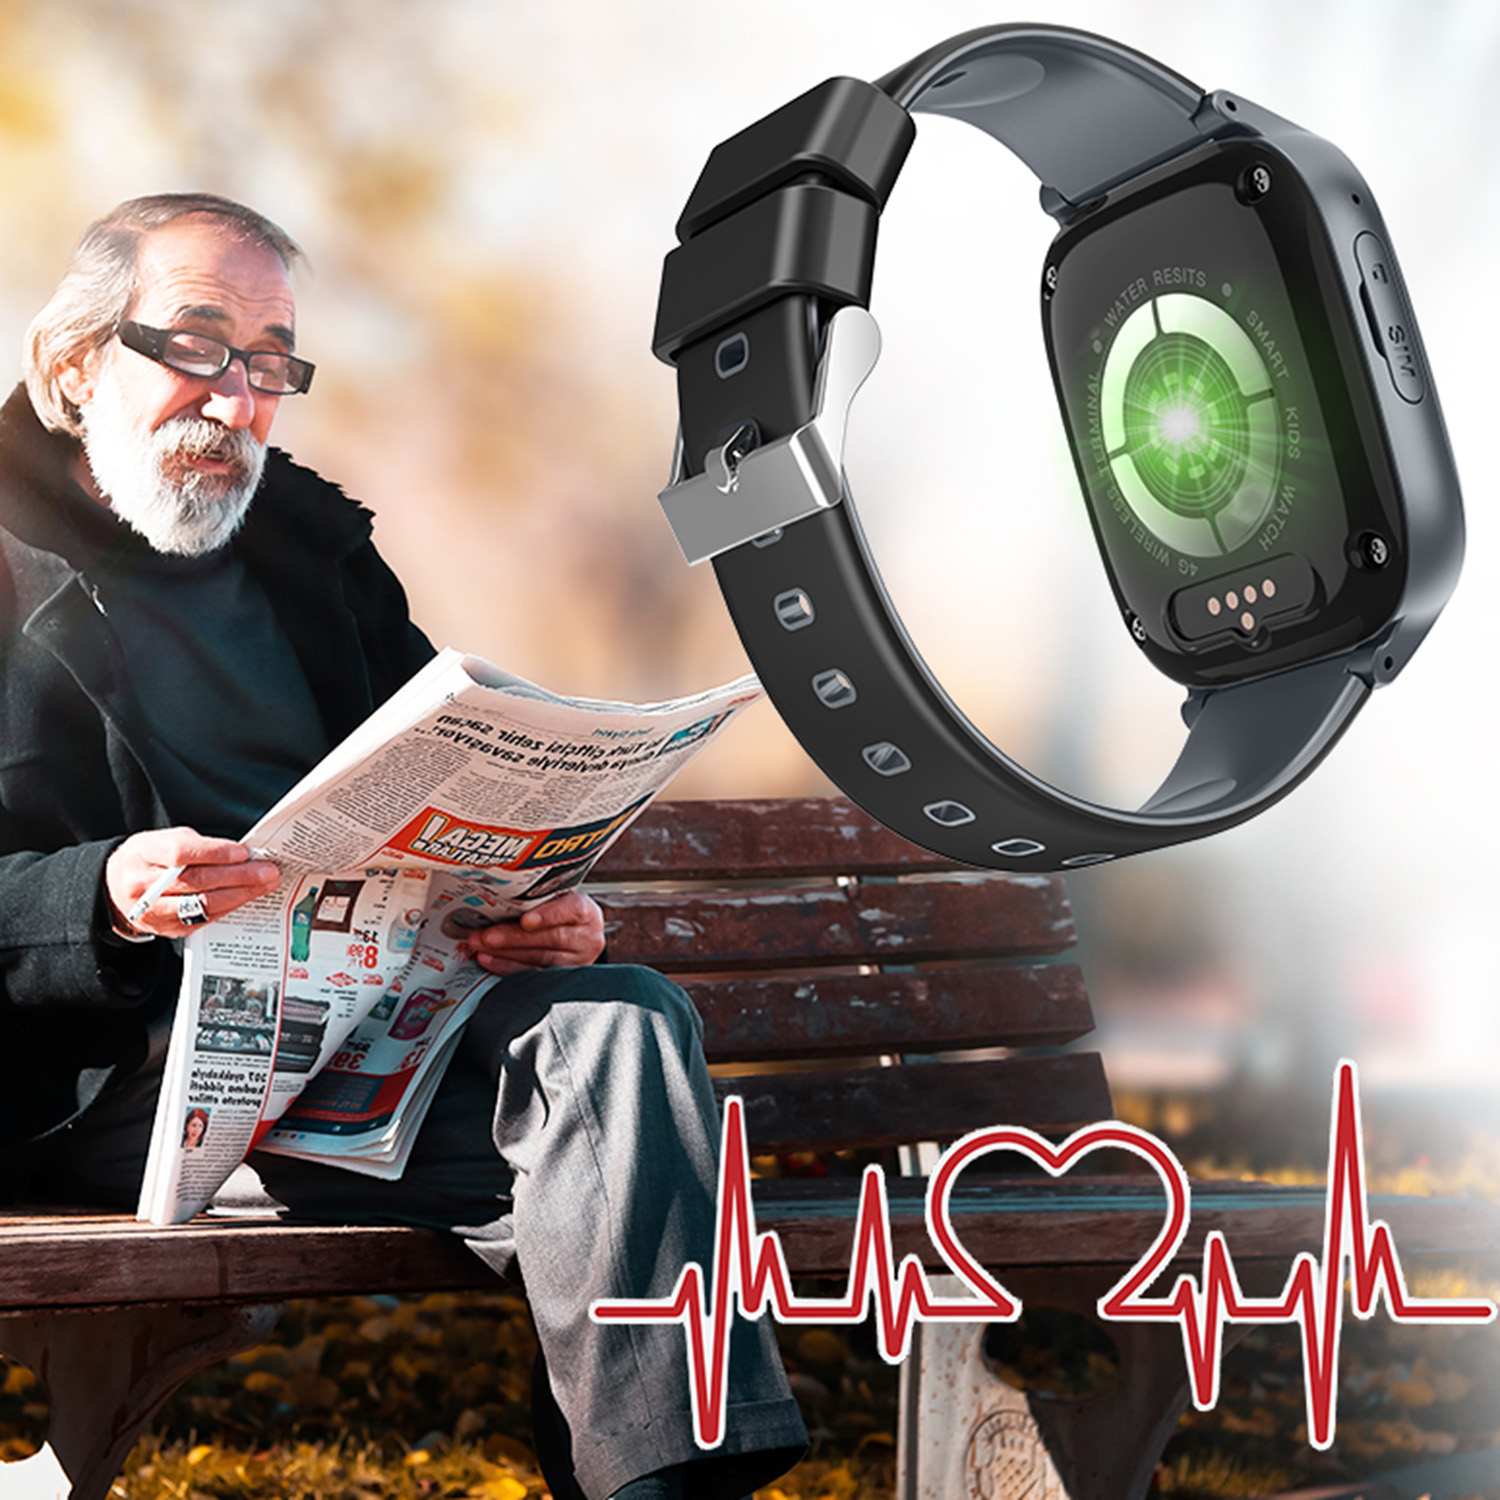 4G HR BP Senior fitness Smart GPS Tracker Watch D41U